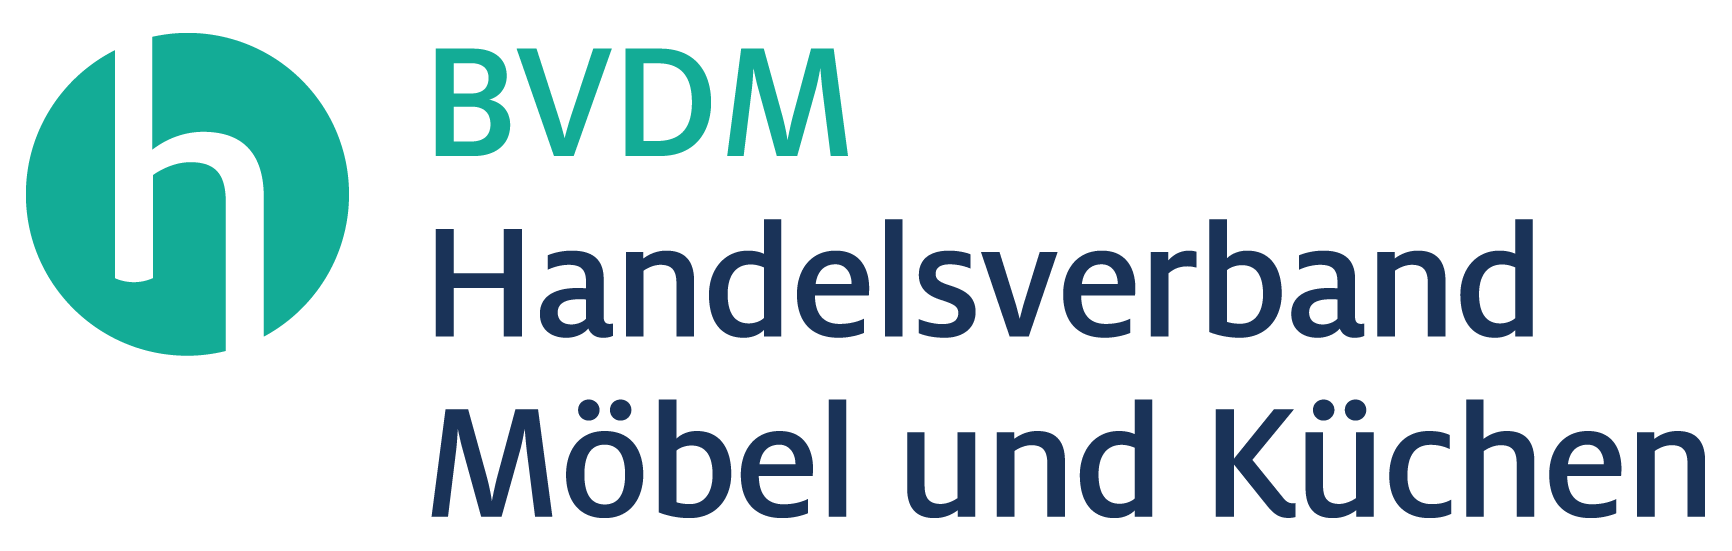 BVDM Logo 2016